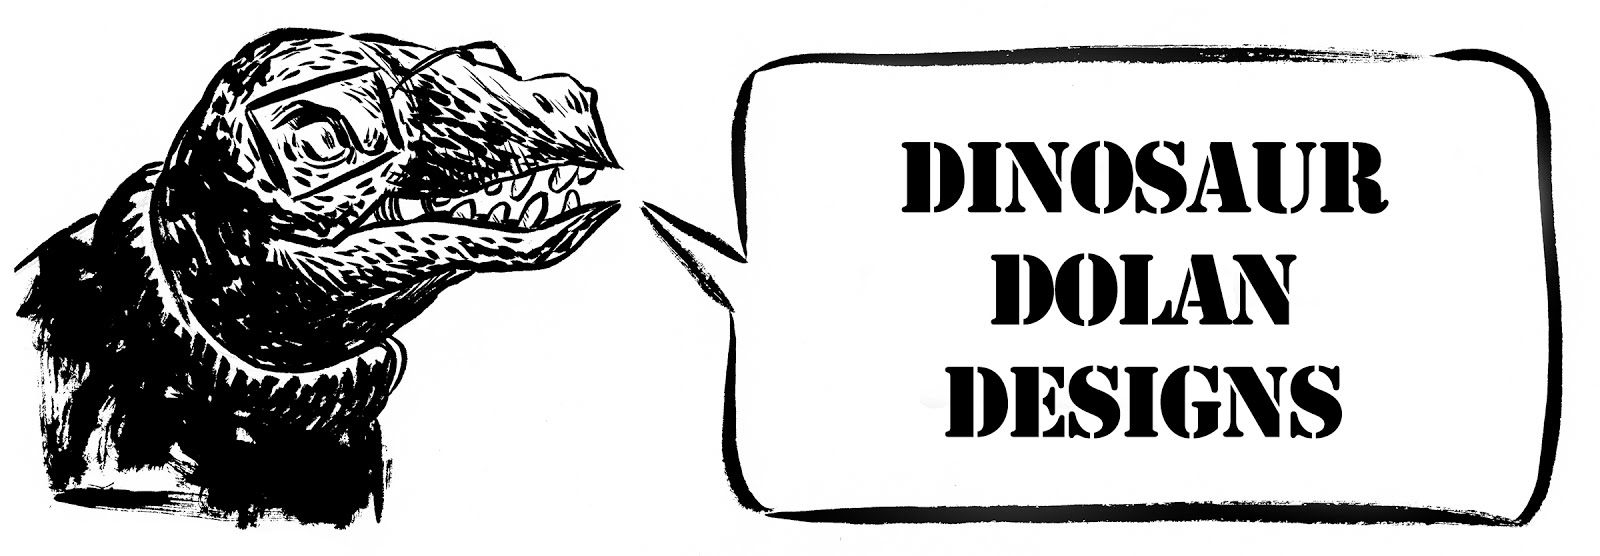 Dinosaur Dolan Designs